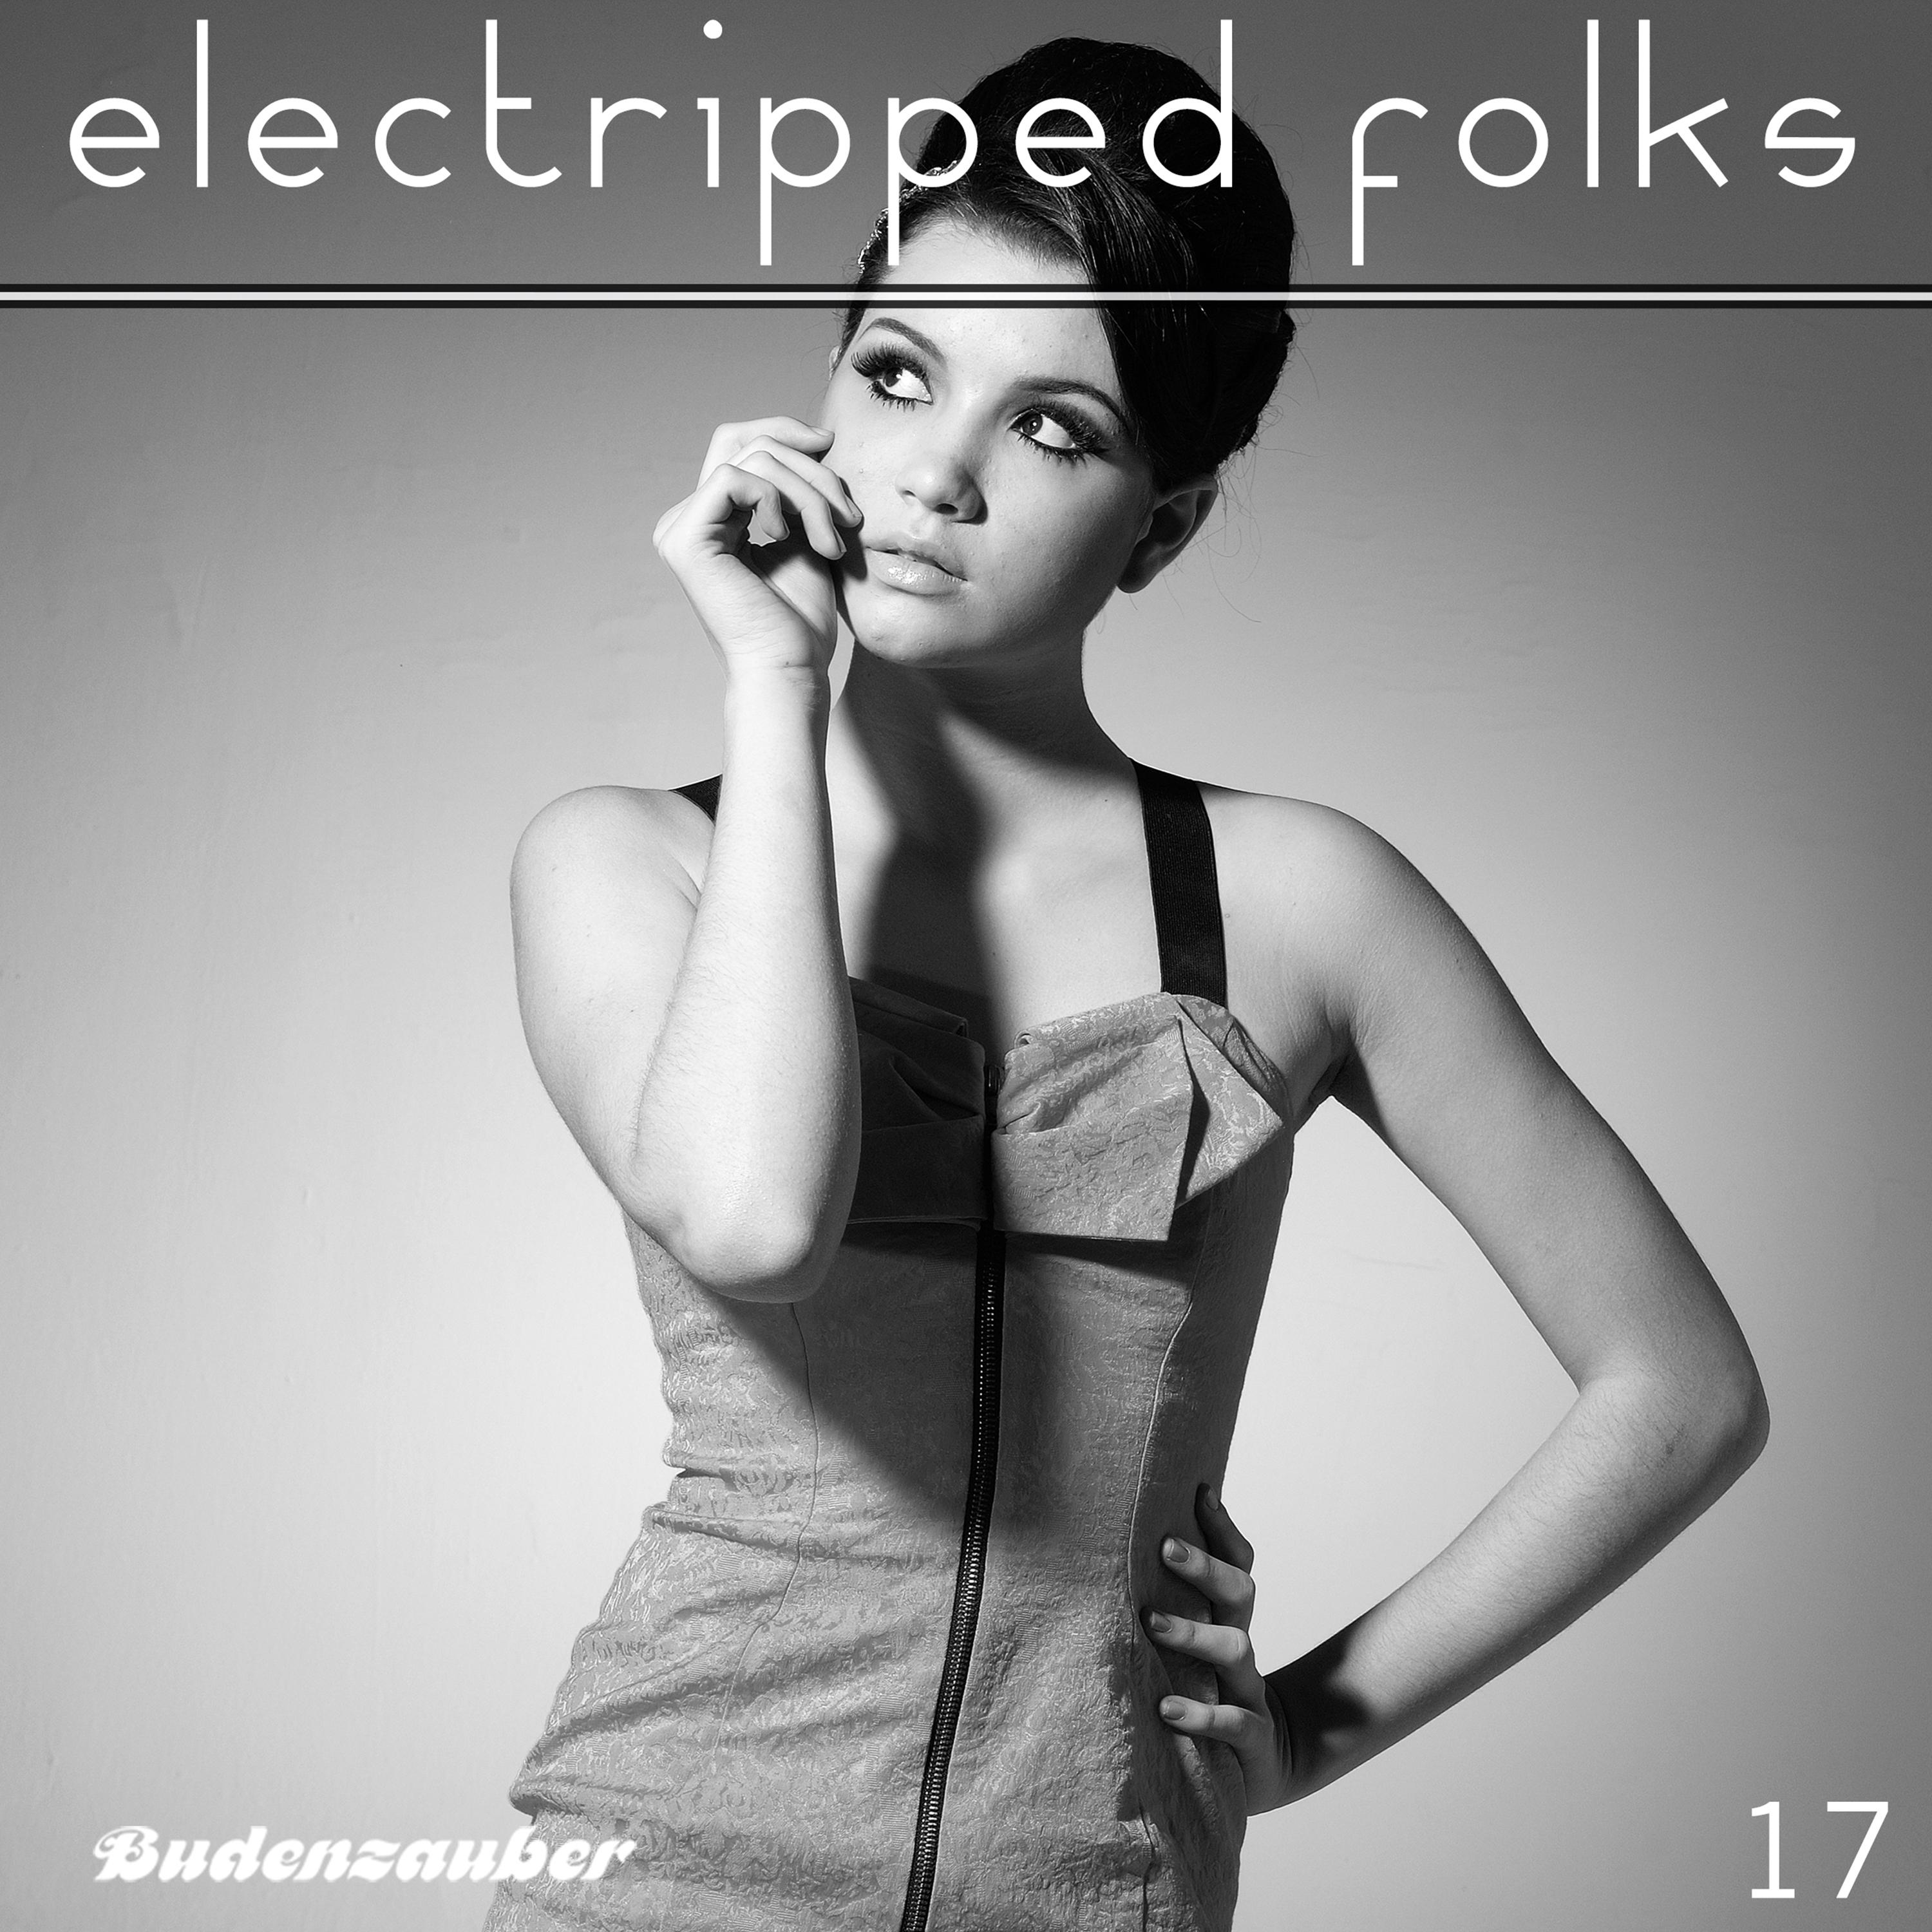 Electripped Folks, 17